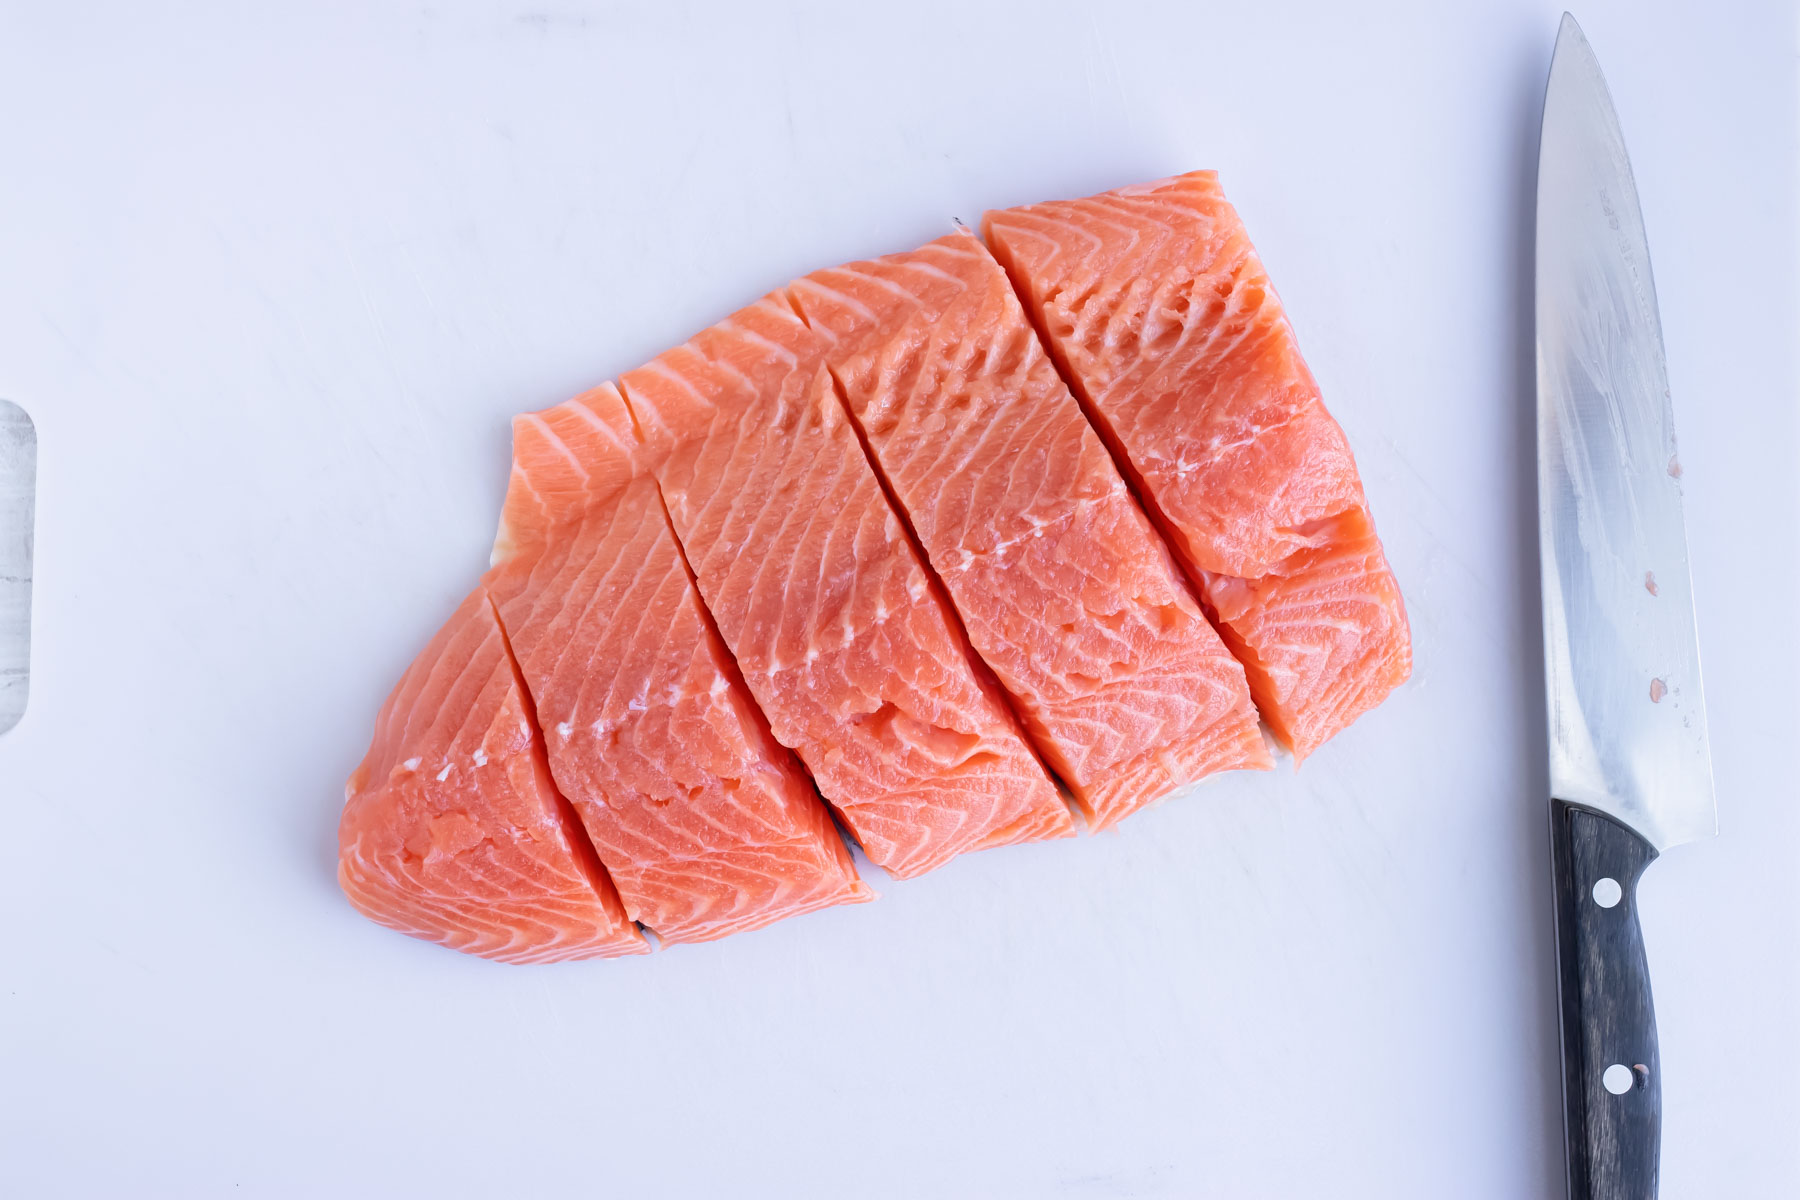 A pound of salmon cut into fillets.